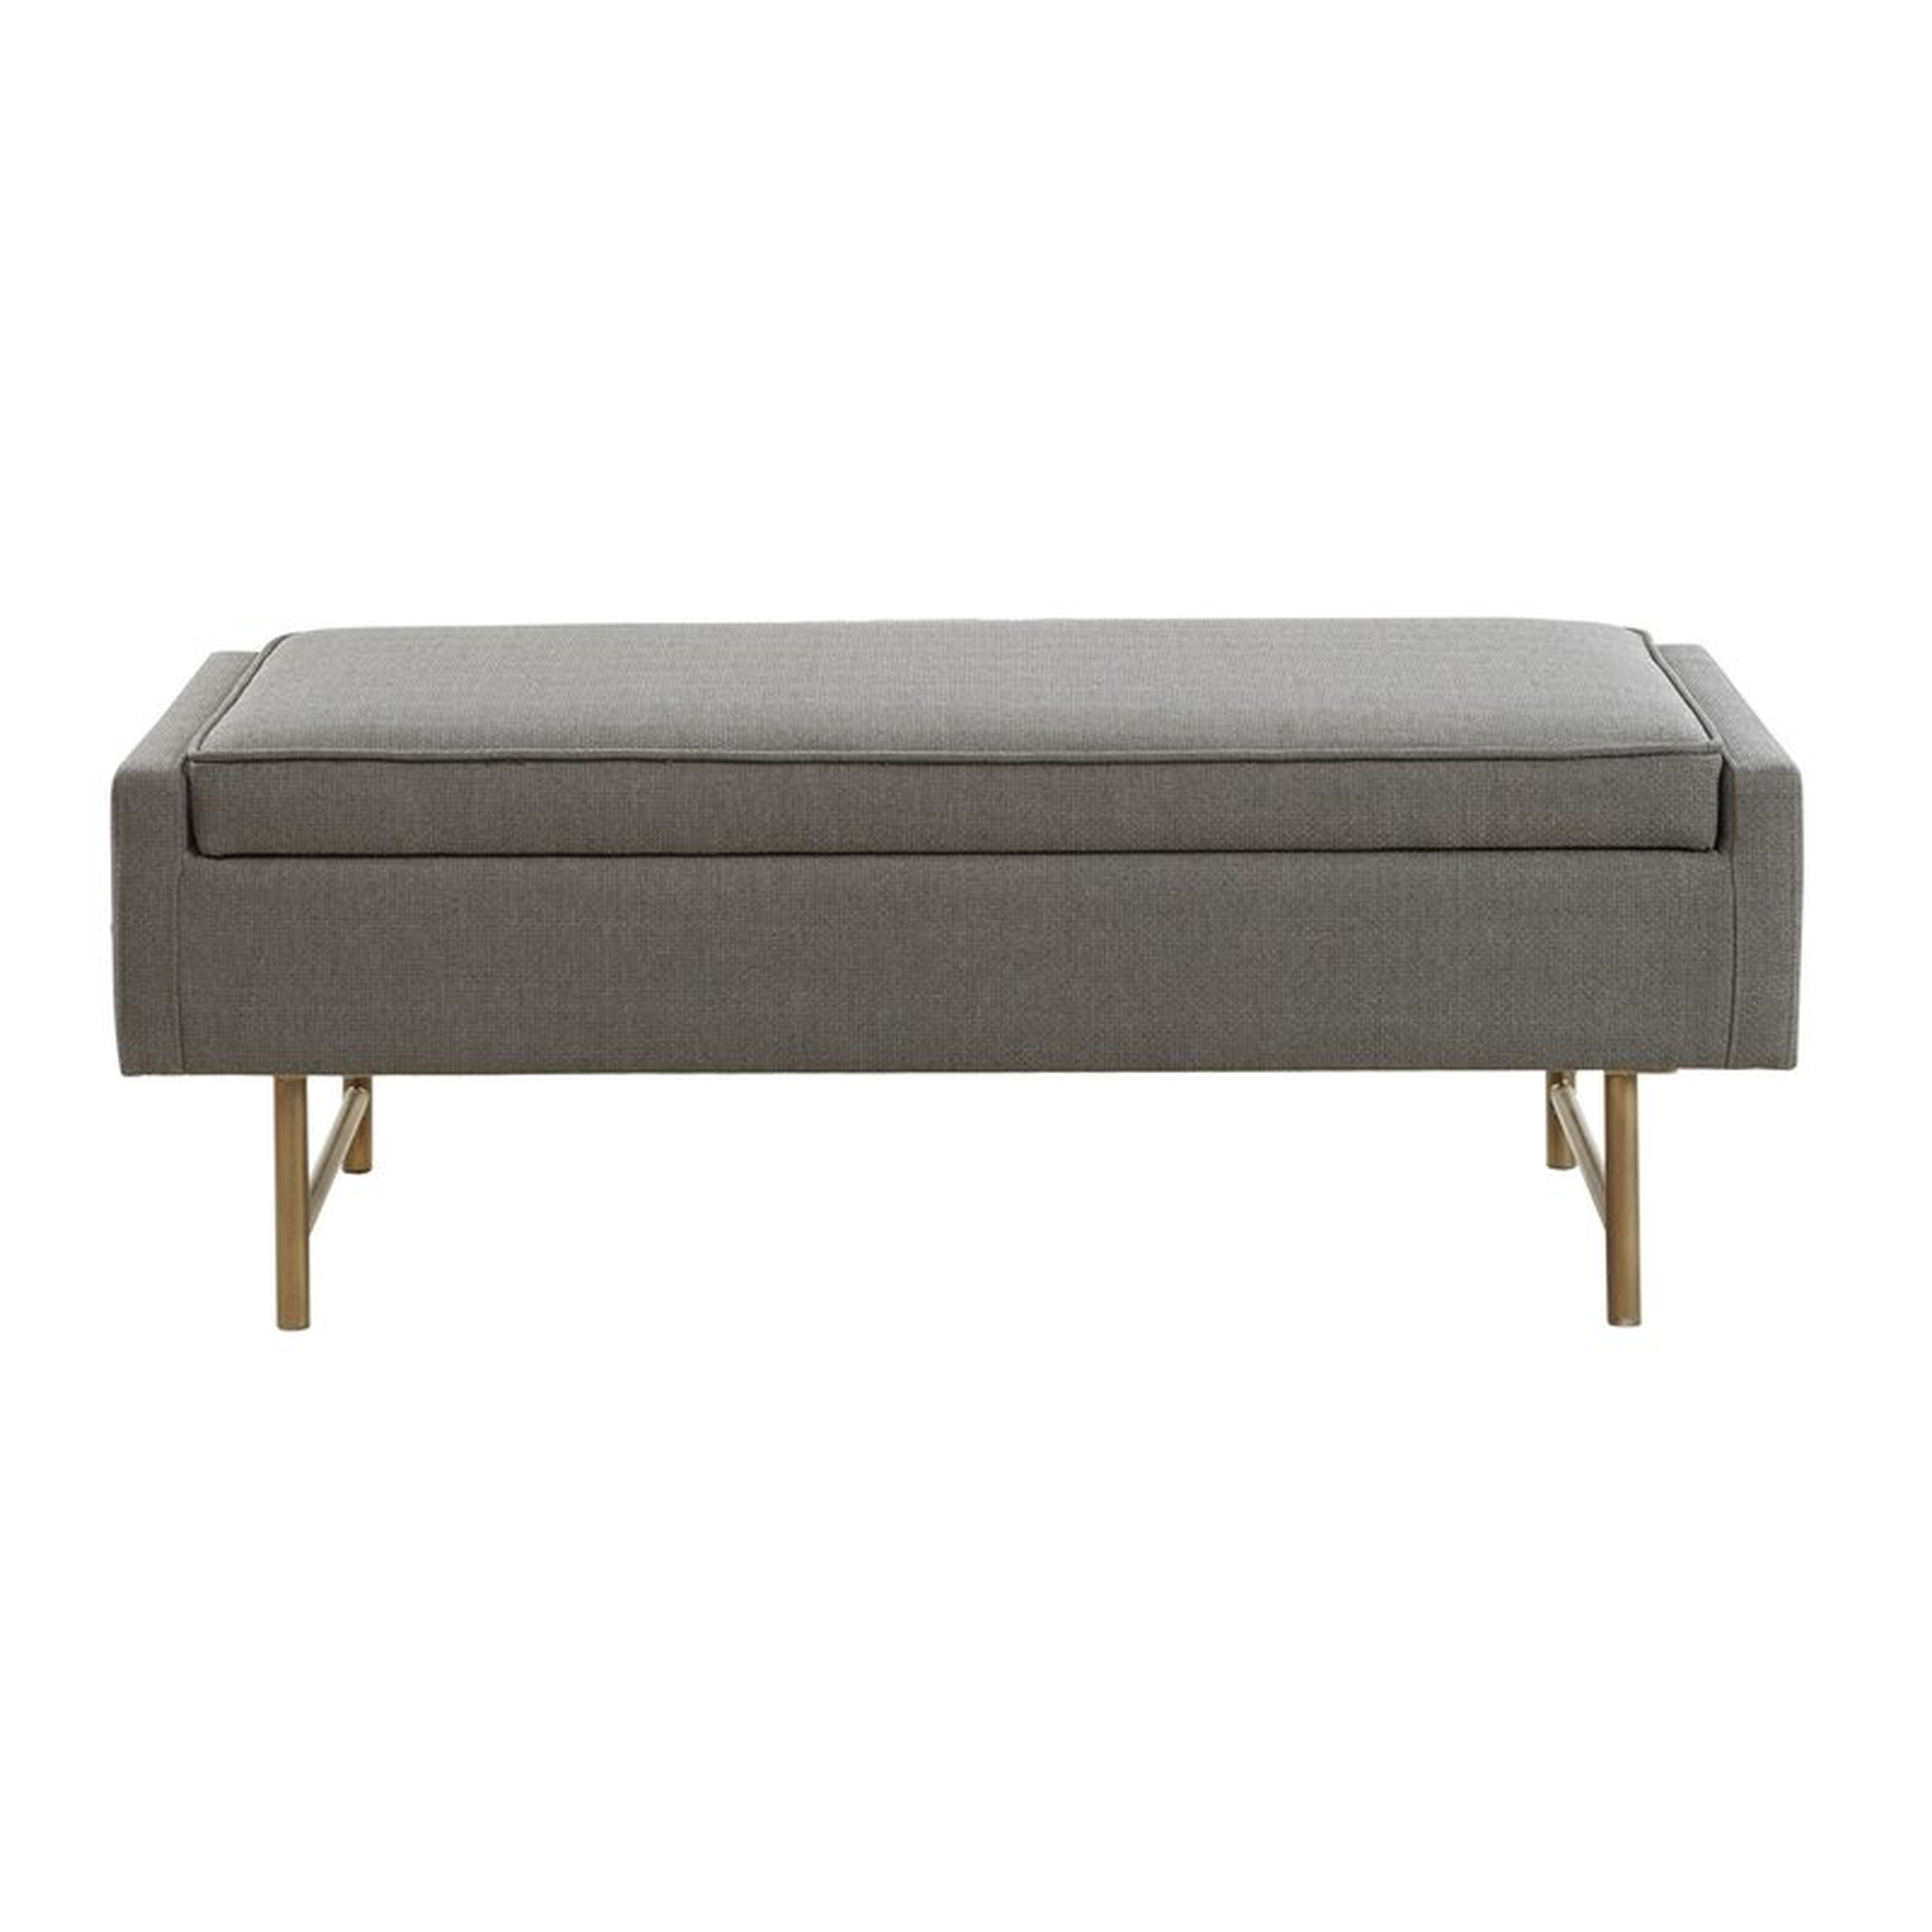 BABSY Upholstered Flip Top Storage Bench, Gray - Wayfair